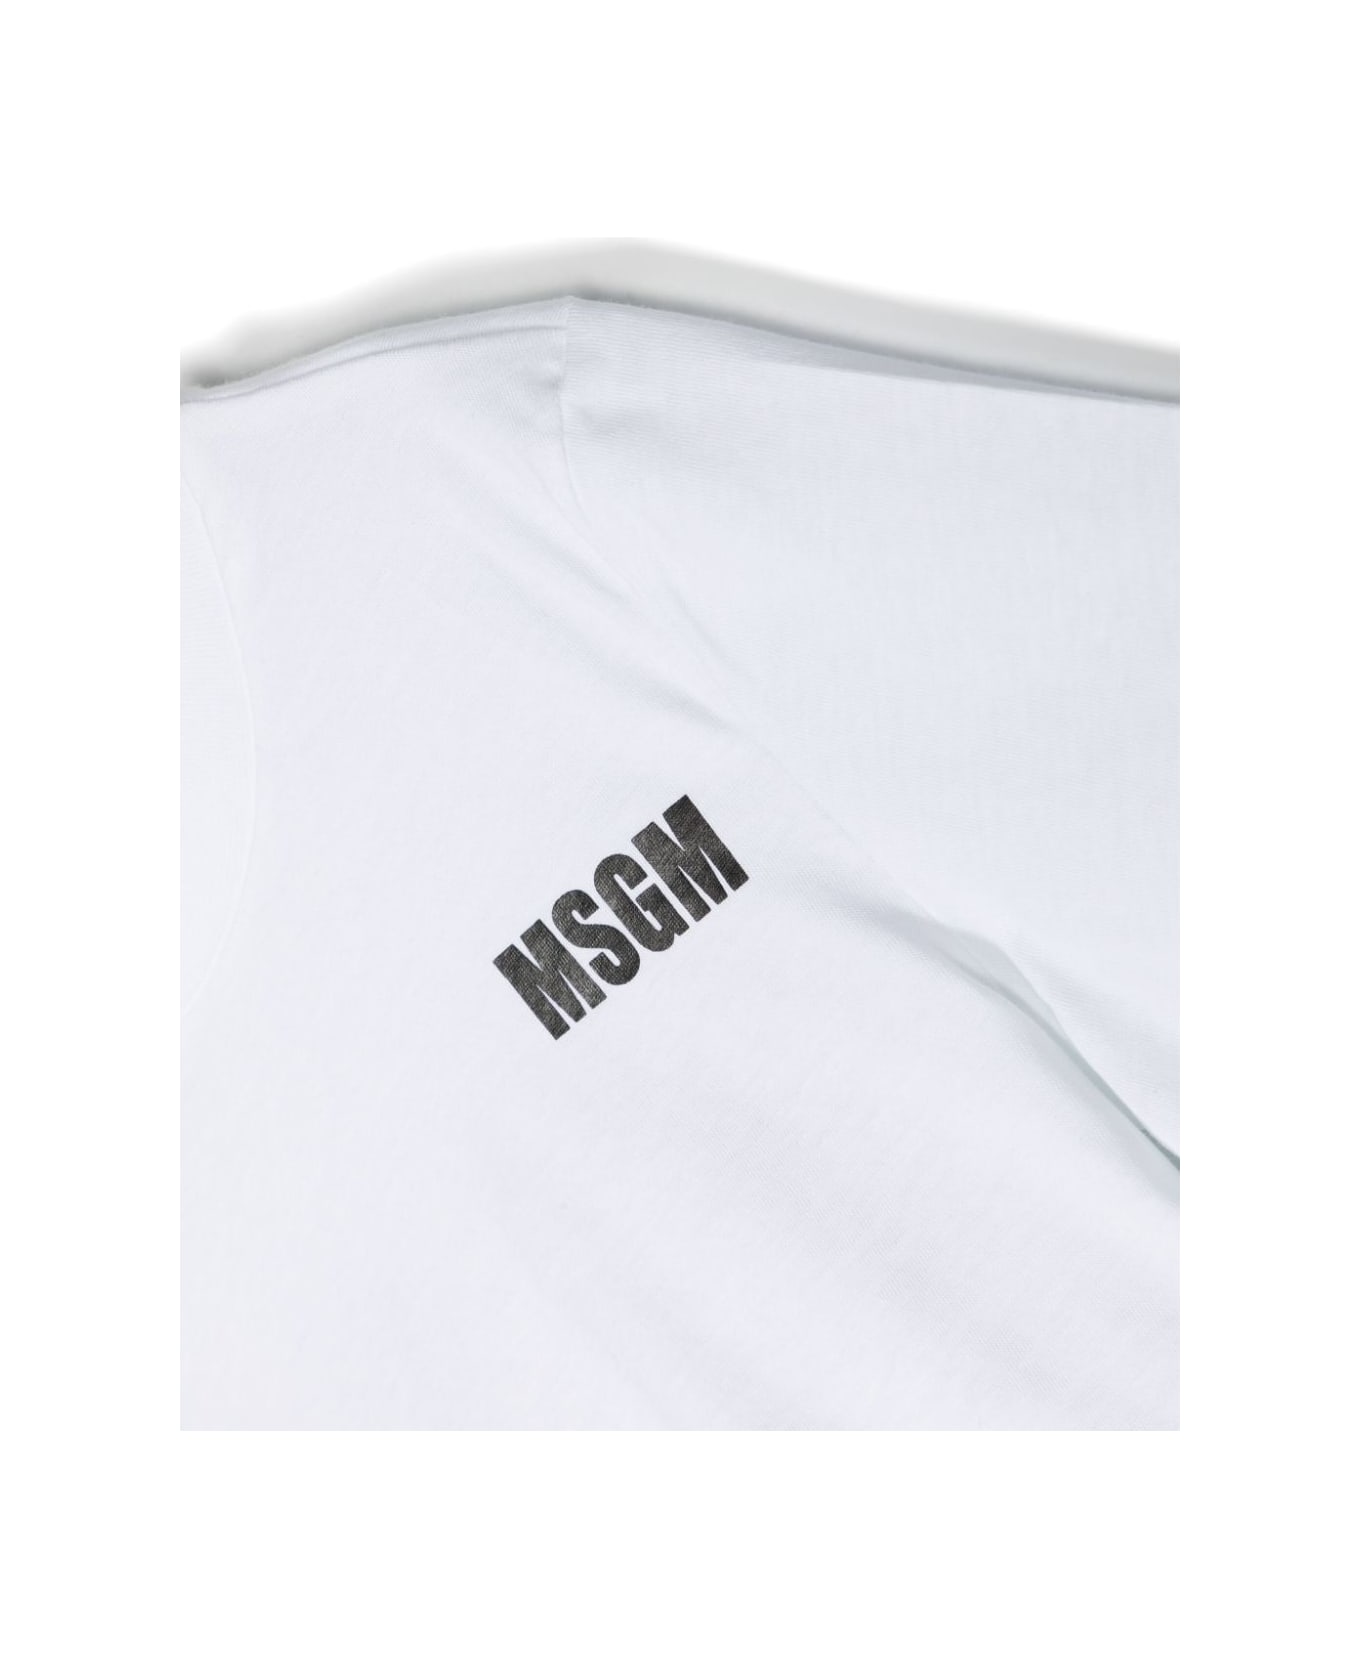 MSGM T-shirt Con Stampa - White